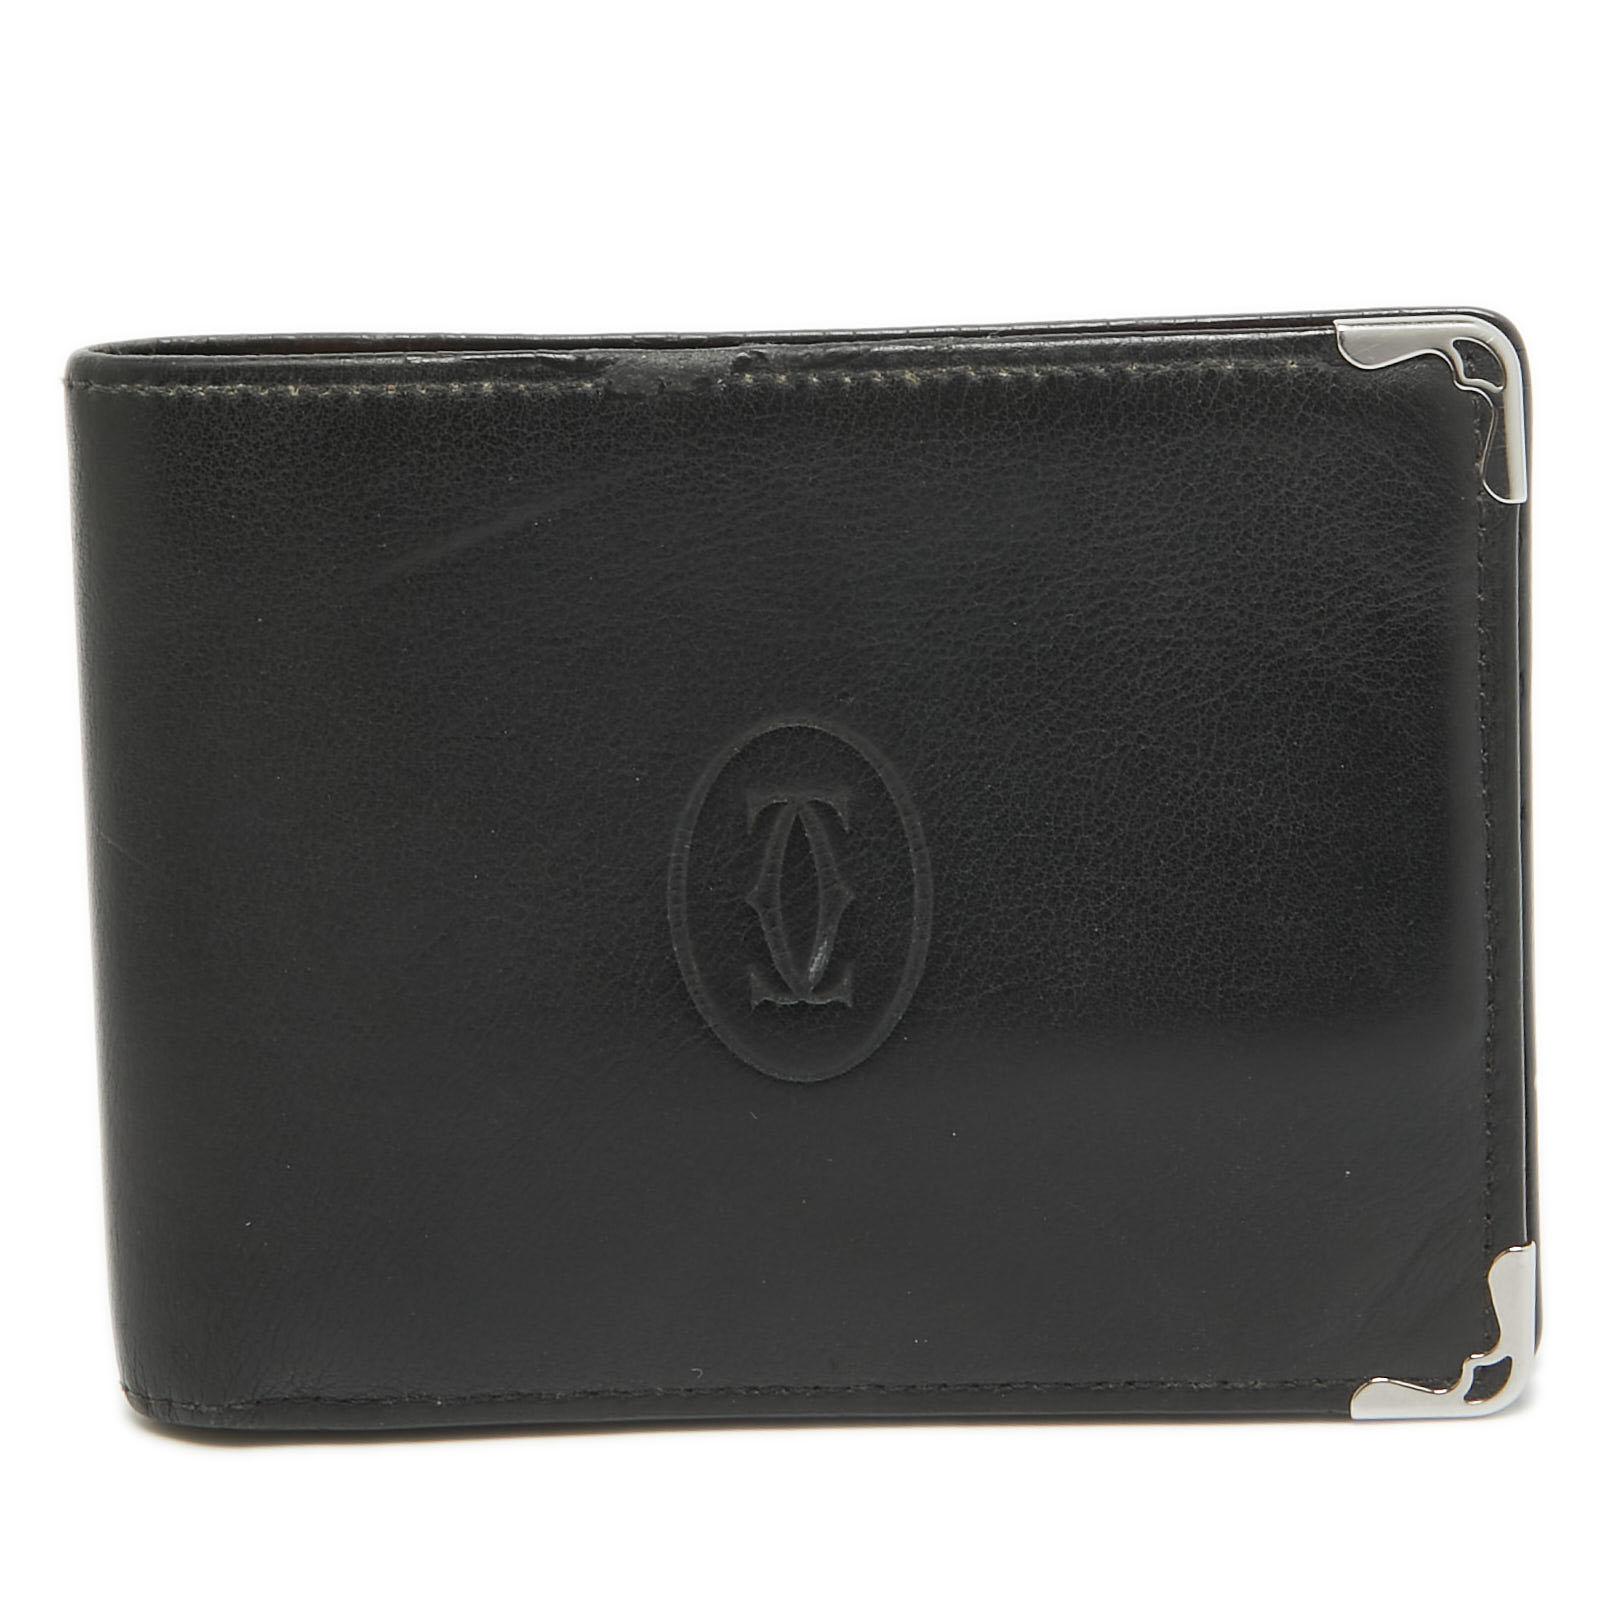 Cartier black leather must de cartier wallet